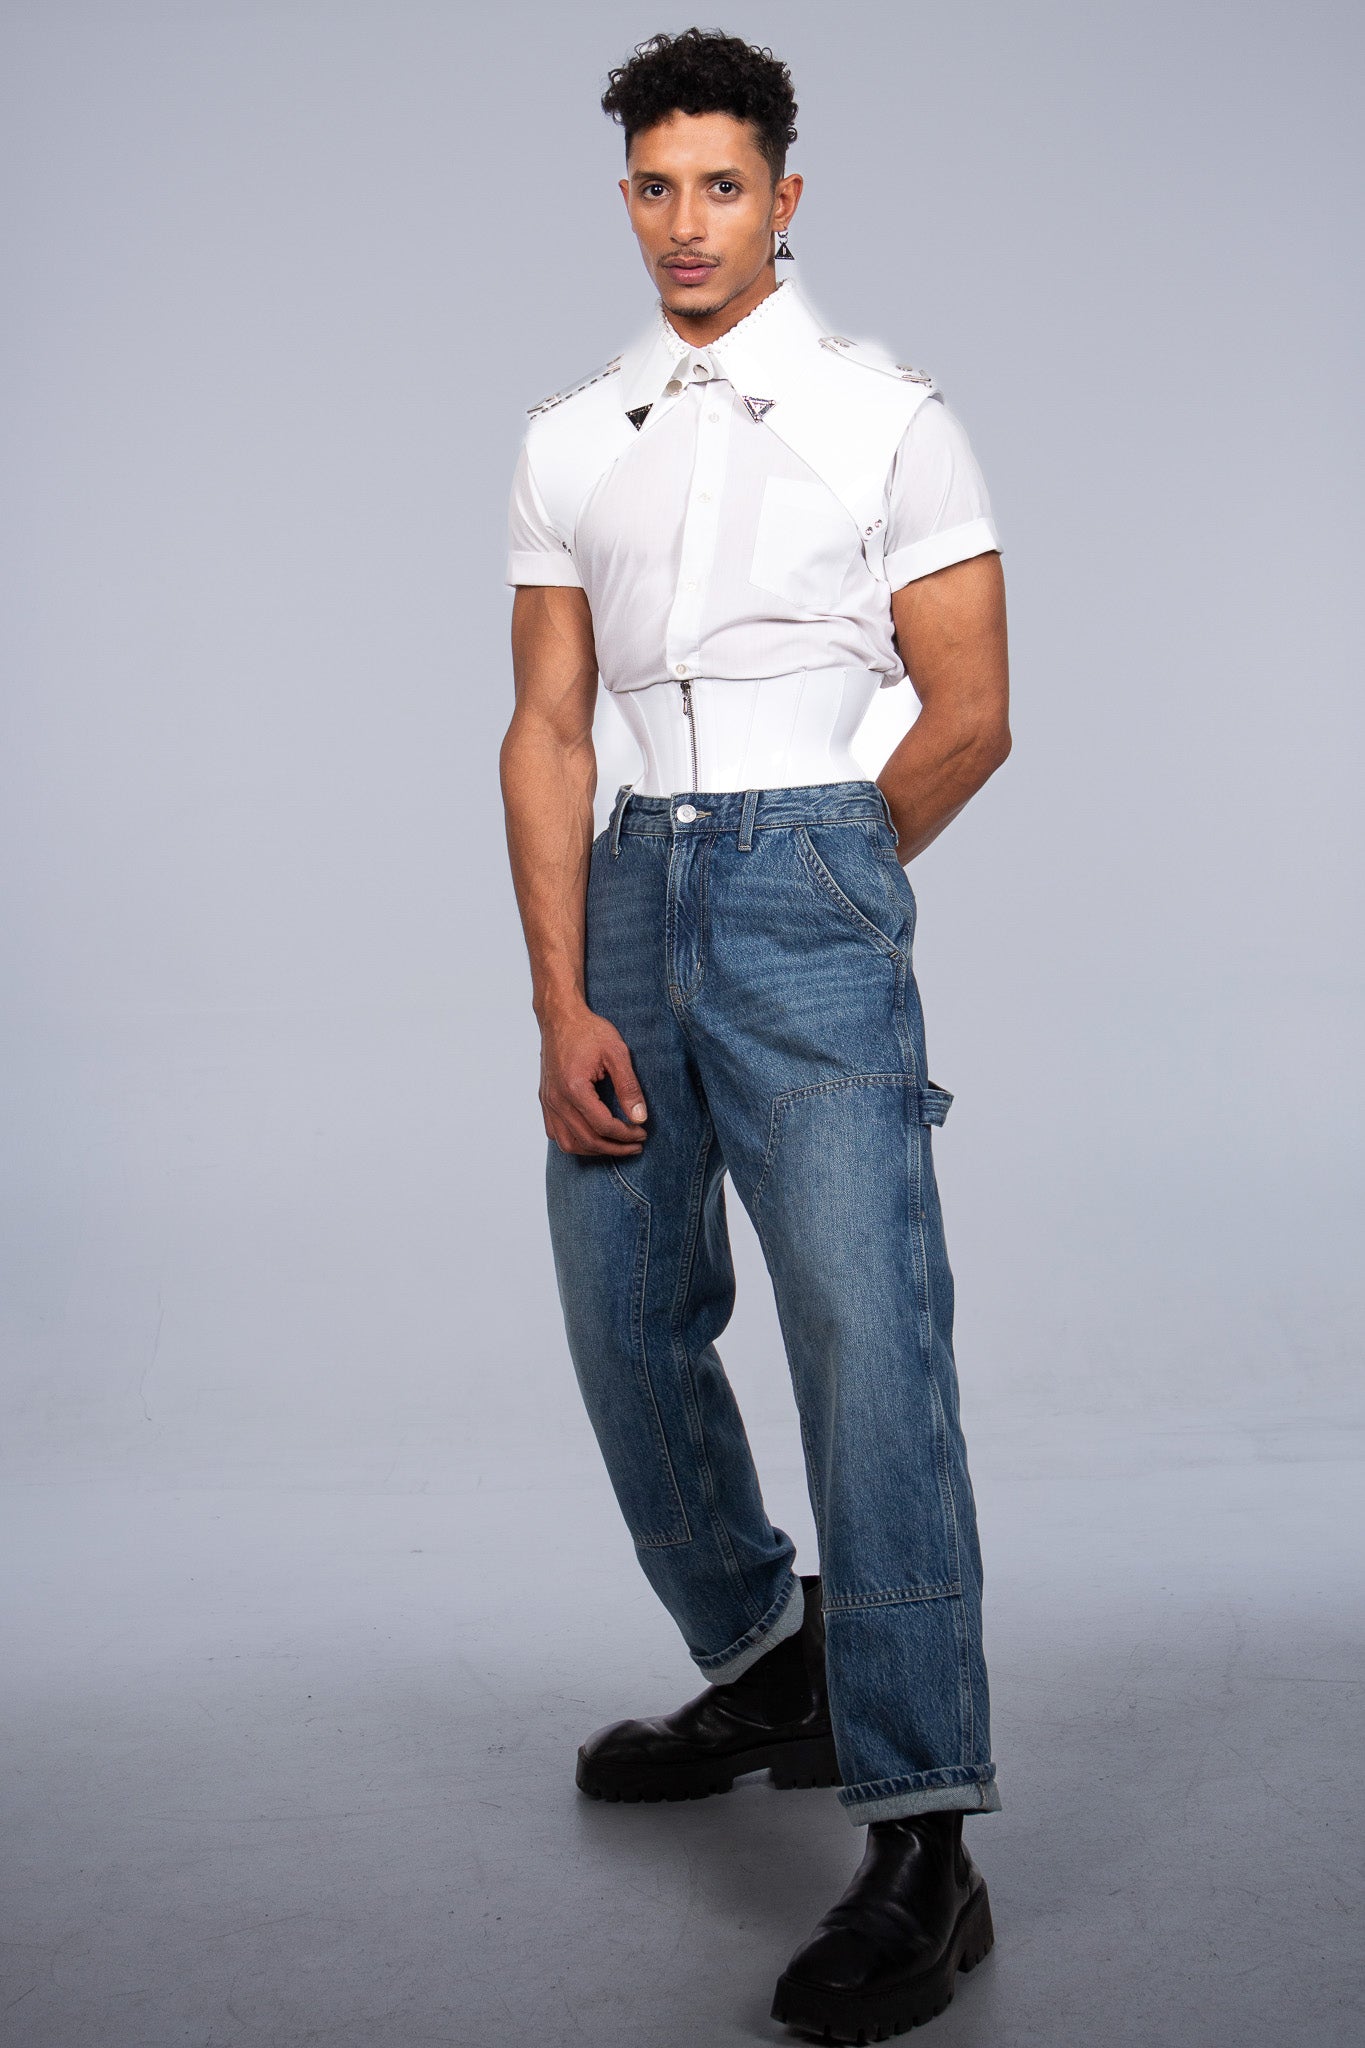 Sleek shiny white Violetta corset belt designed for versatility and style